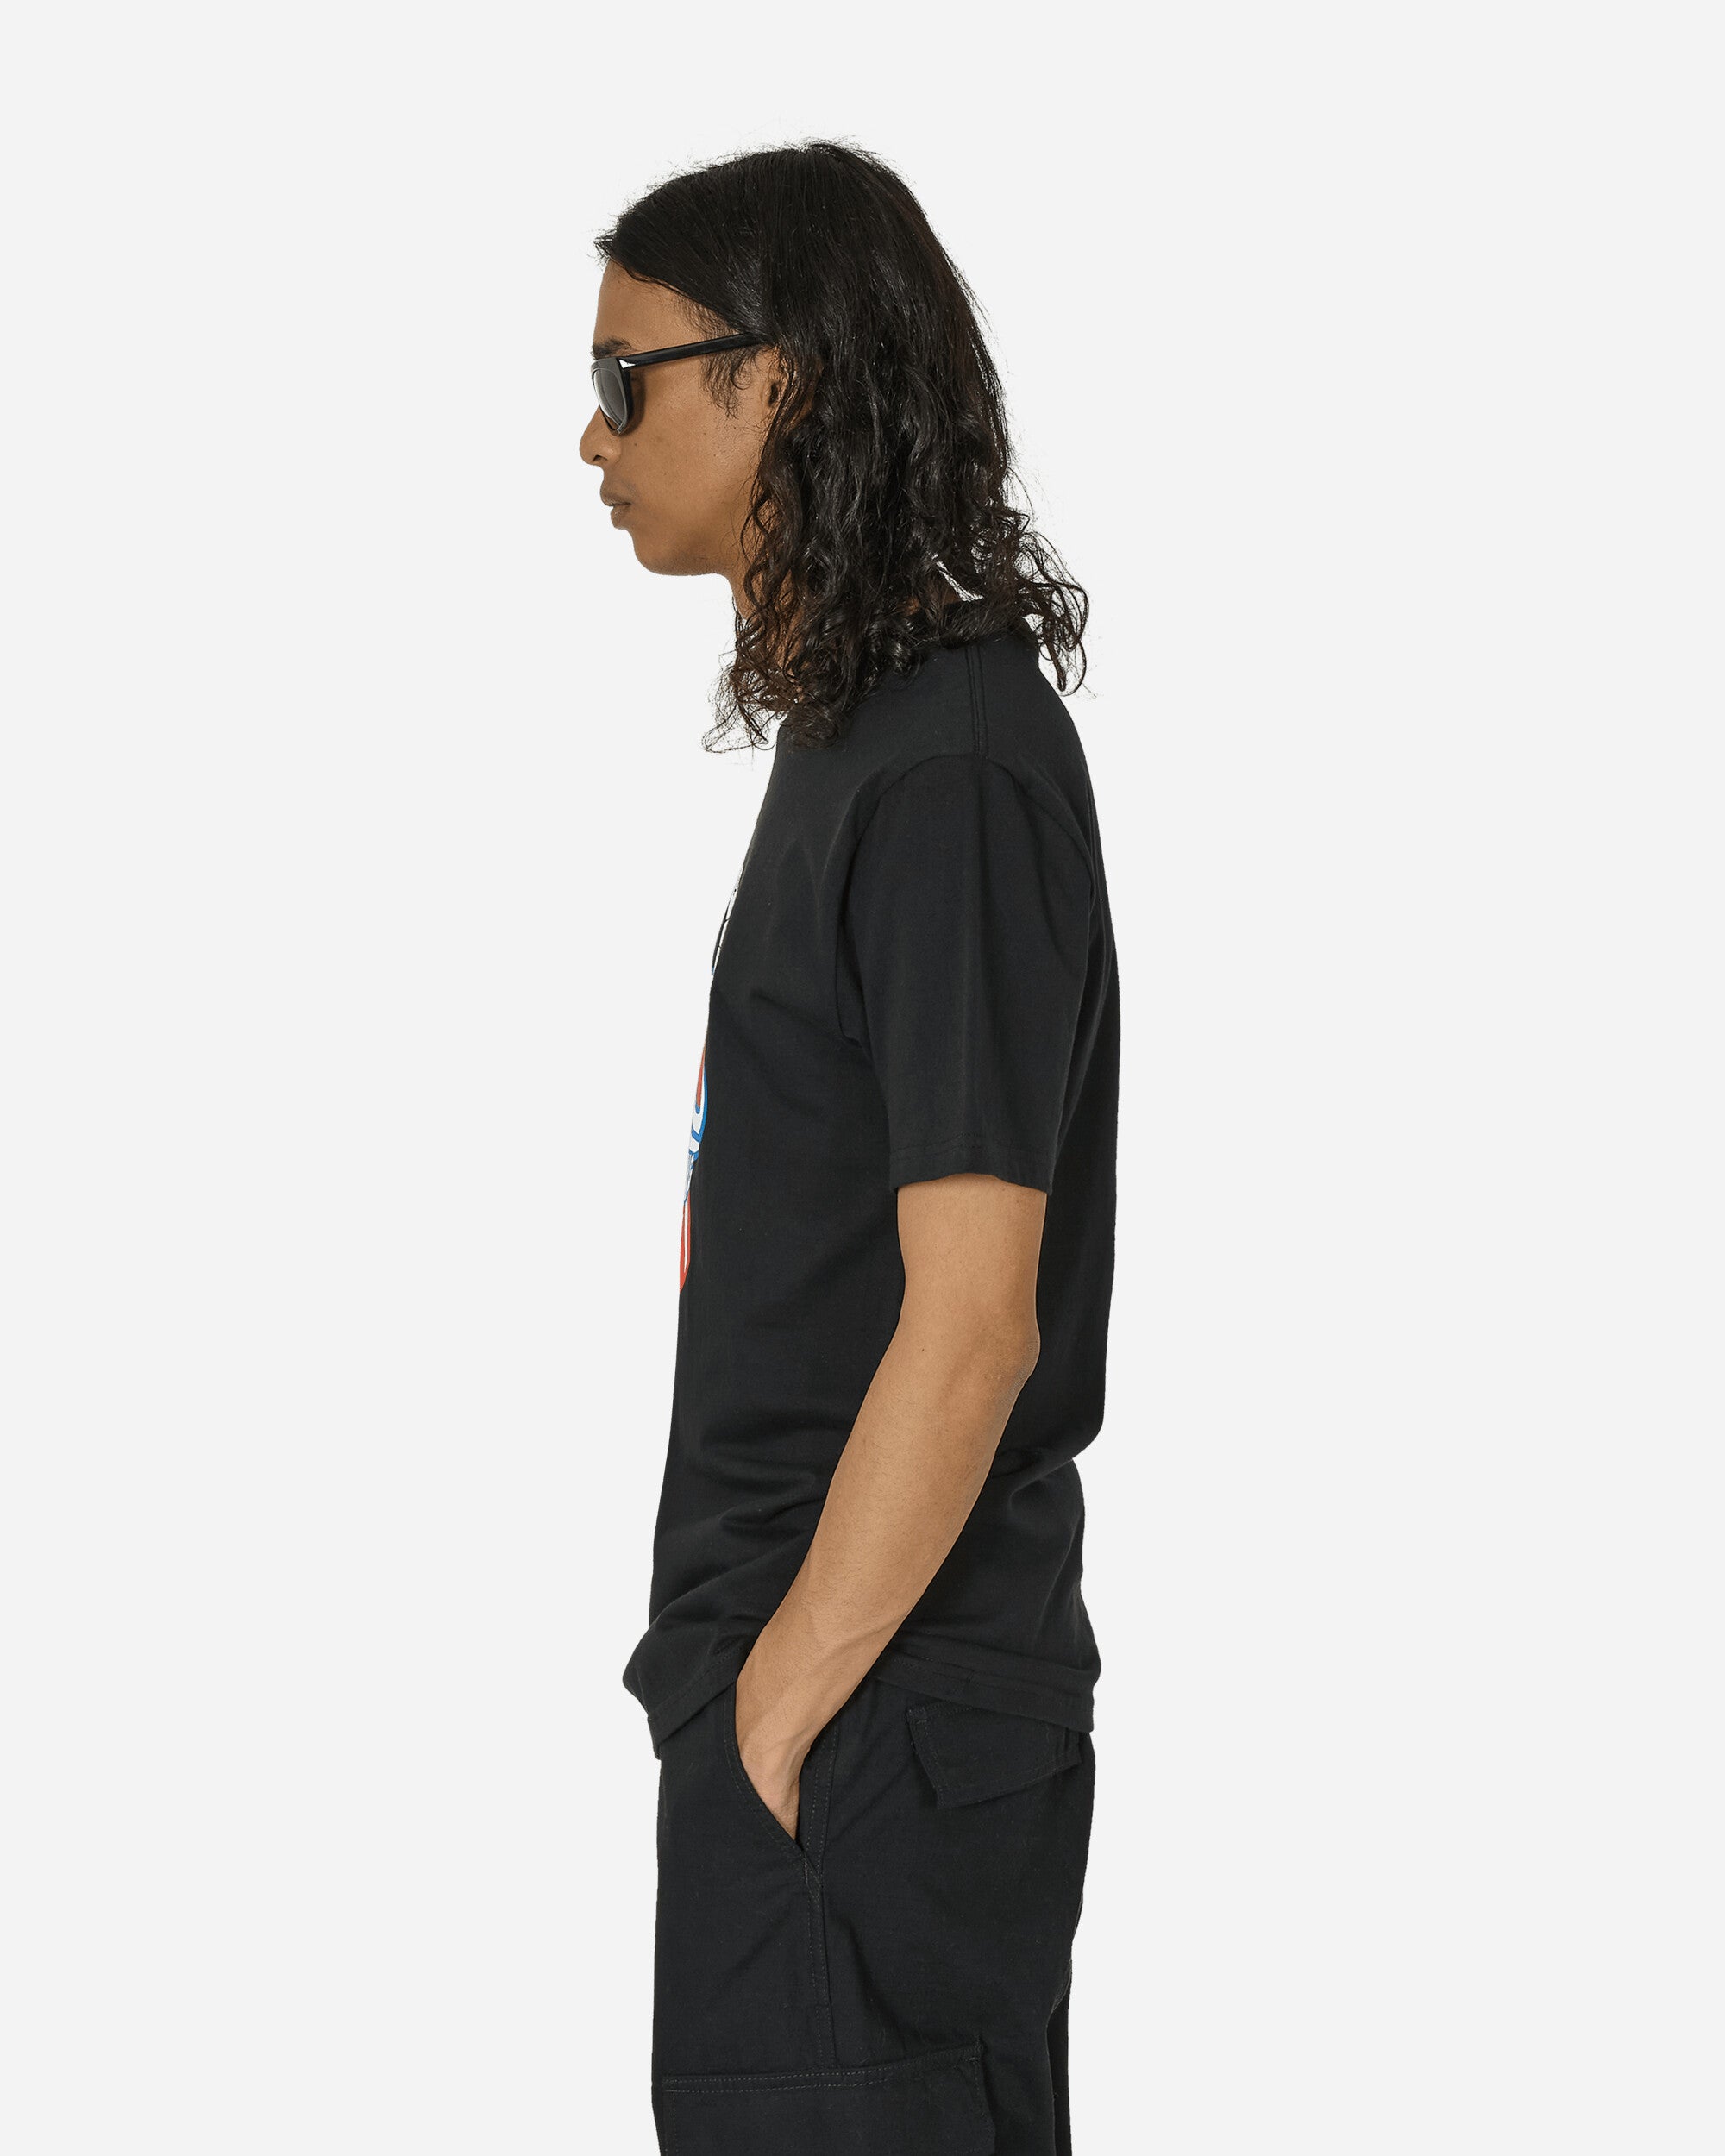 aNYthing Snakeapple T-Shirt Black T-Shirts Shortsleeve ANY-056 BK